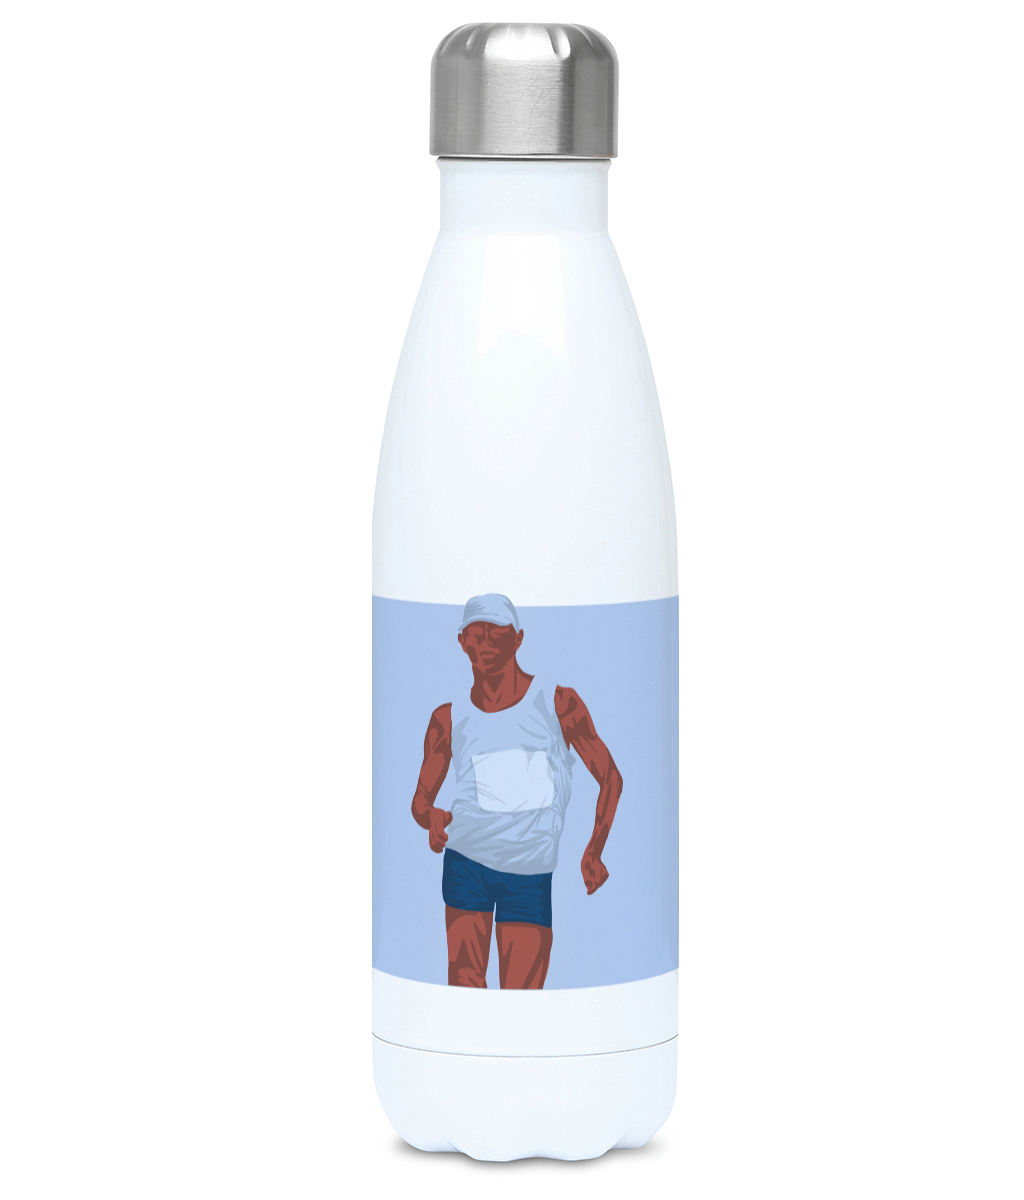 Athletics insulated bottle "Men's walking" - Customizable